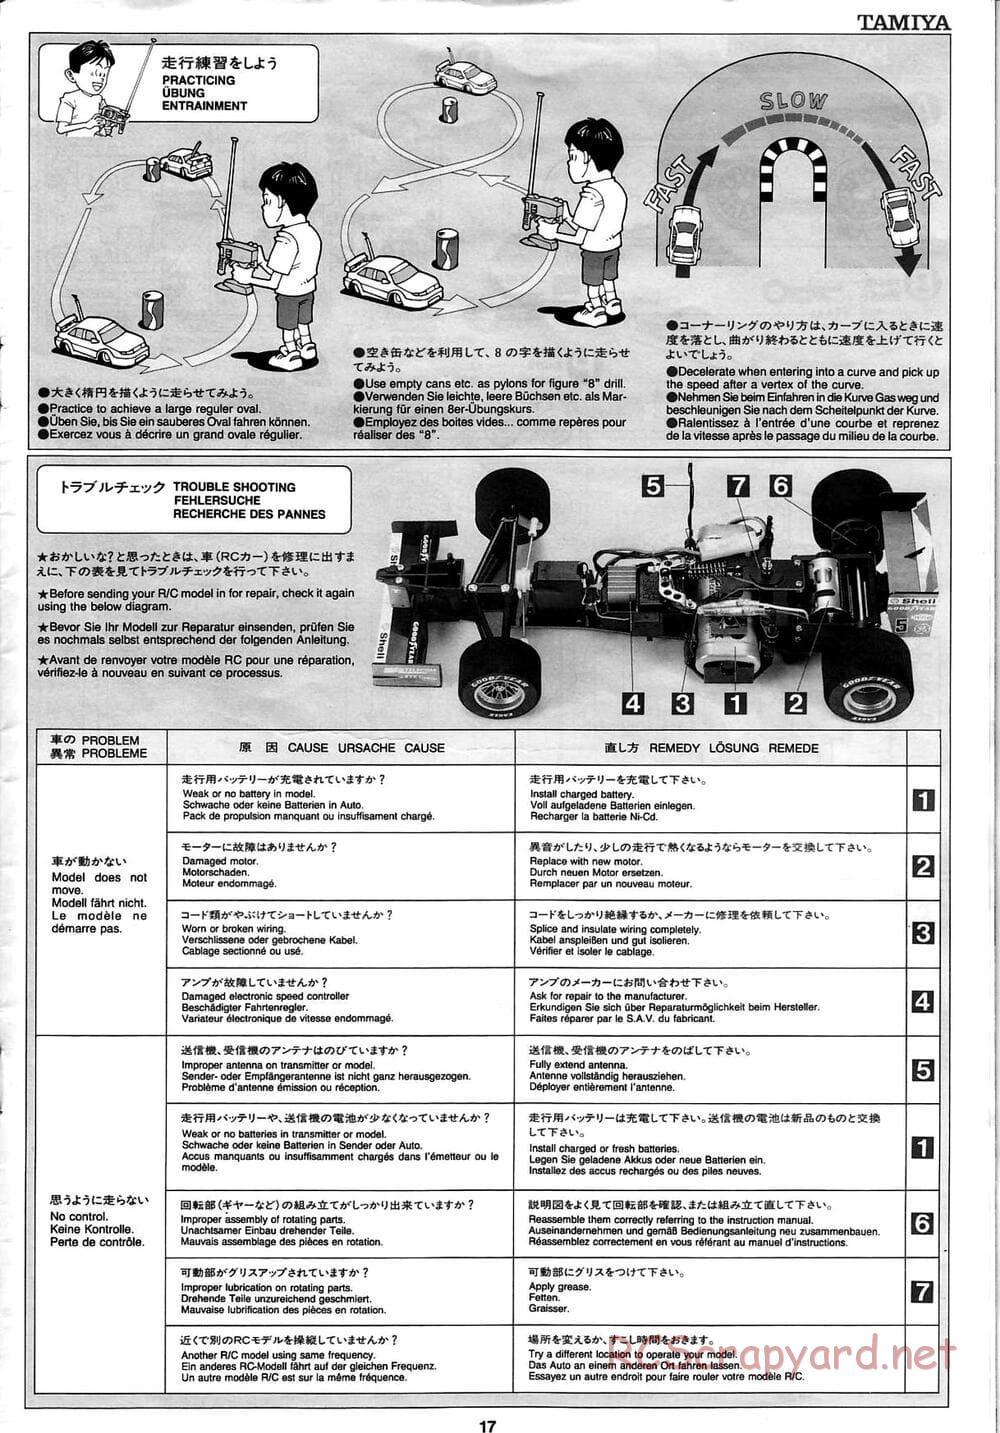 Tamiya - Ferrari F310B - F103RS Chassis - Manual - Page 17